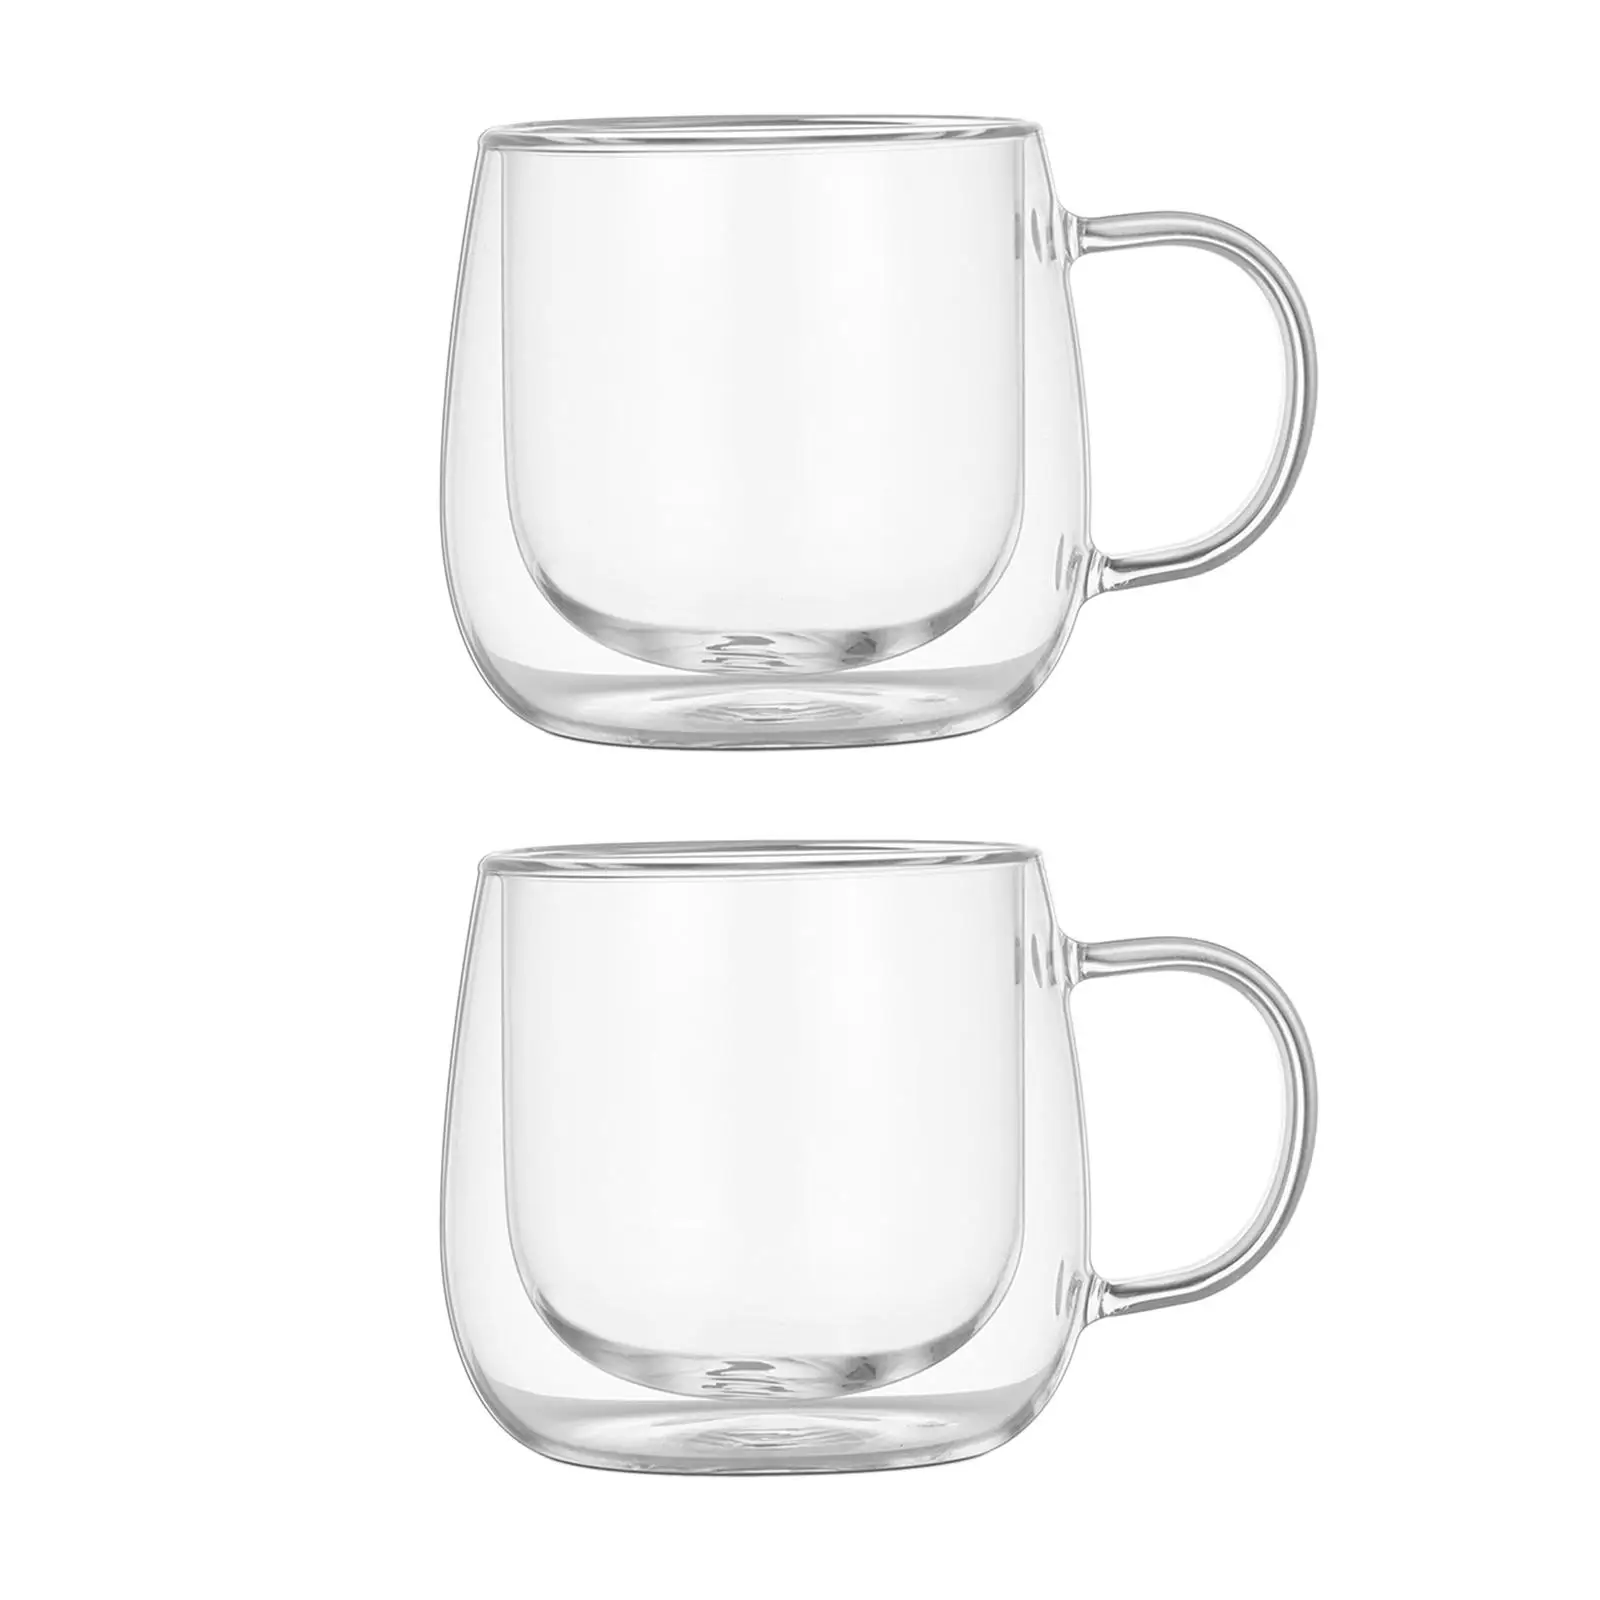 300ml Glass Cup Double Wall Drink Mugs Borosilicate Glass Anti-Scalding Coffee Cup for Teas Ice Cream Hot Coffee